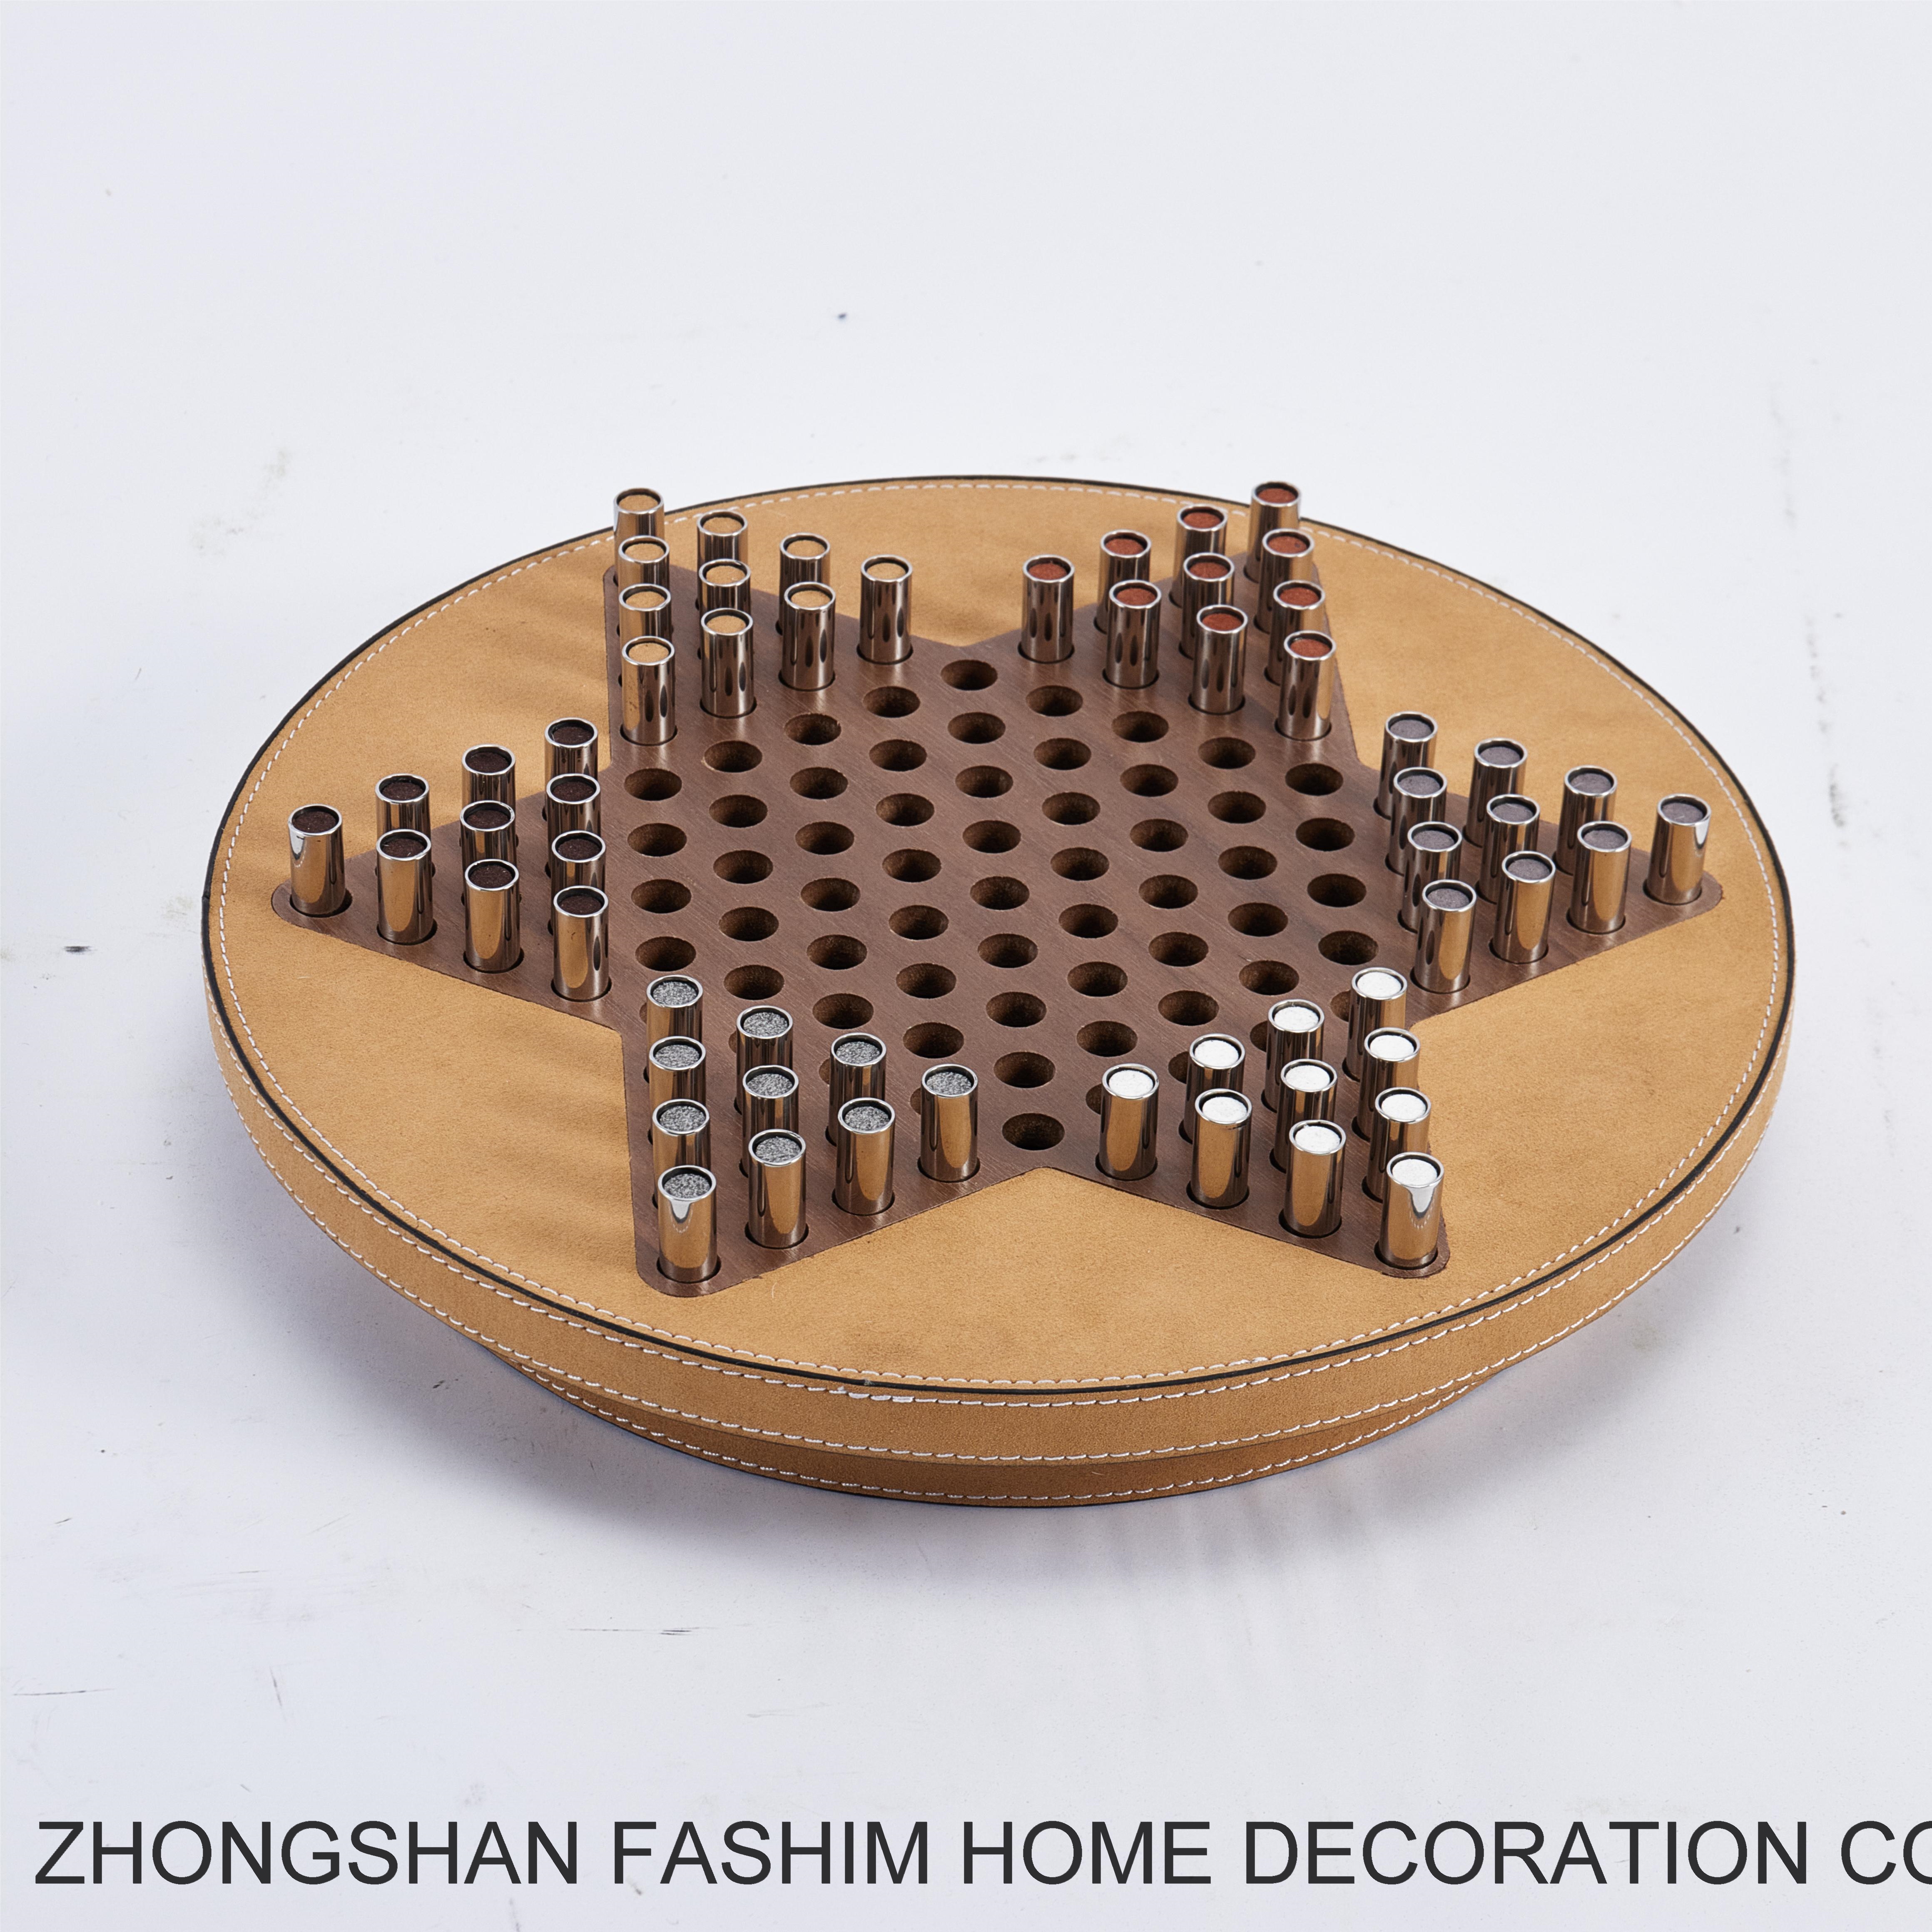 Fashimdecor modern home decoration sculpture ornaments chessboard